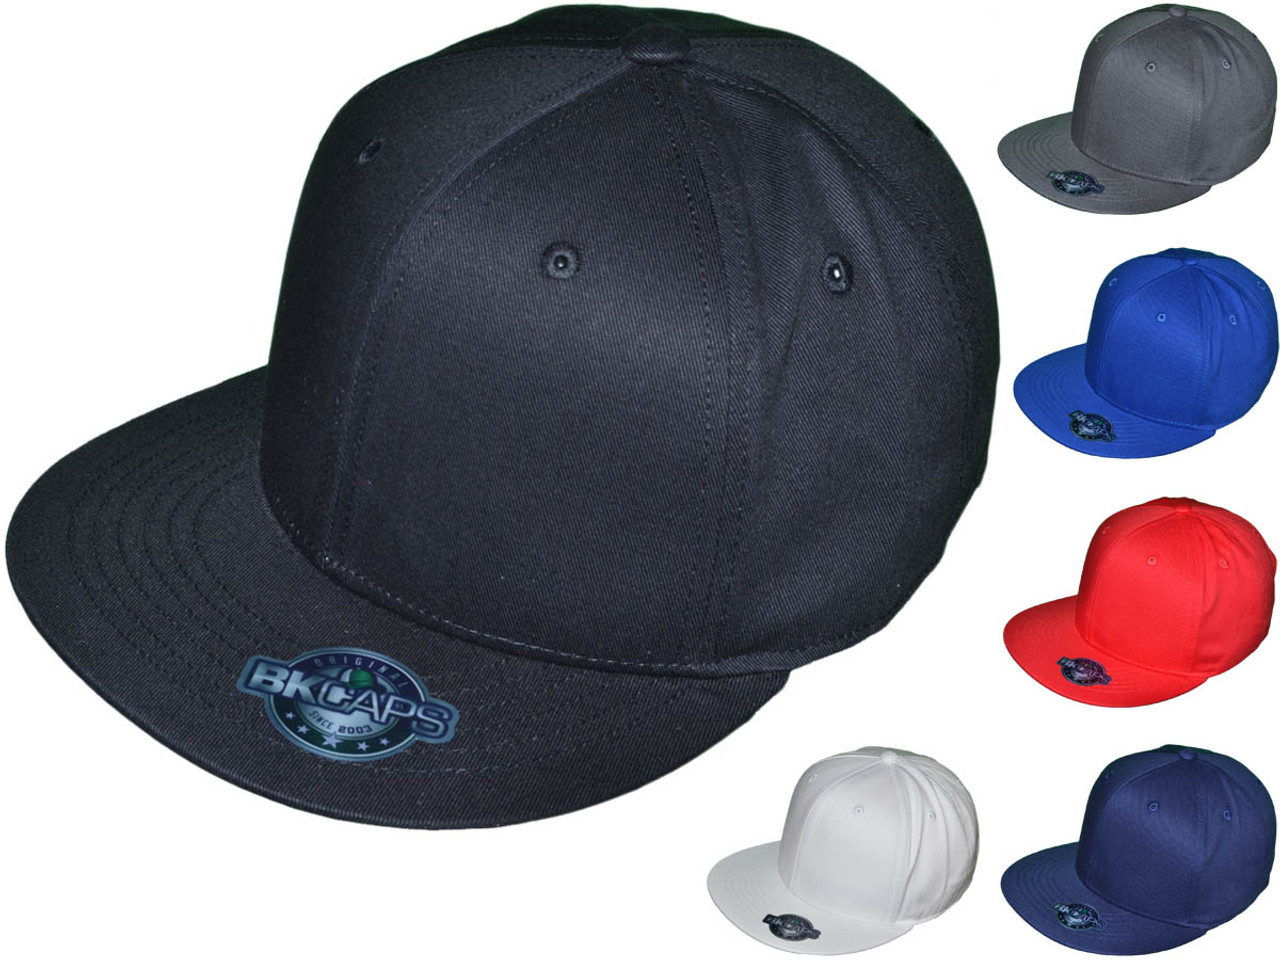 https://cdn11.bigcommerce.com/s-qhlg41l/images/stencil/1280x1280/products/5315/34470/wholesale-blank-cotton-snapback-hats-bkcaps-premium-quality-black-underbill-321-all-colors__15356.1603134496.jpg?c=2